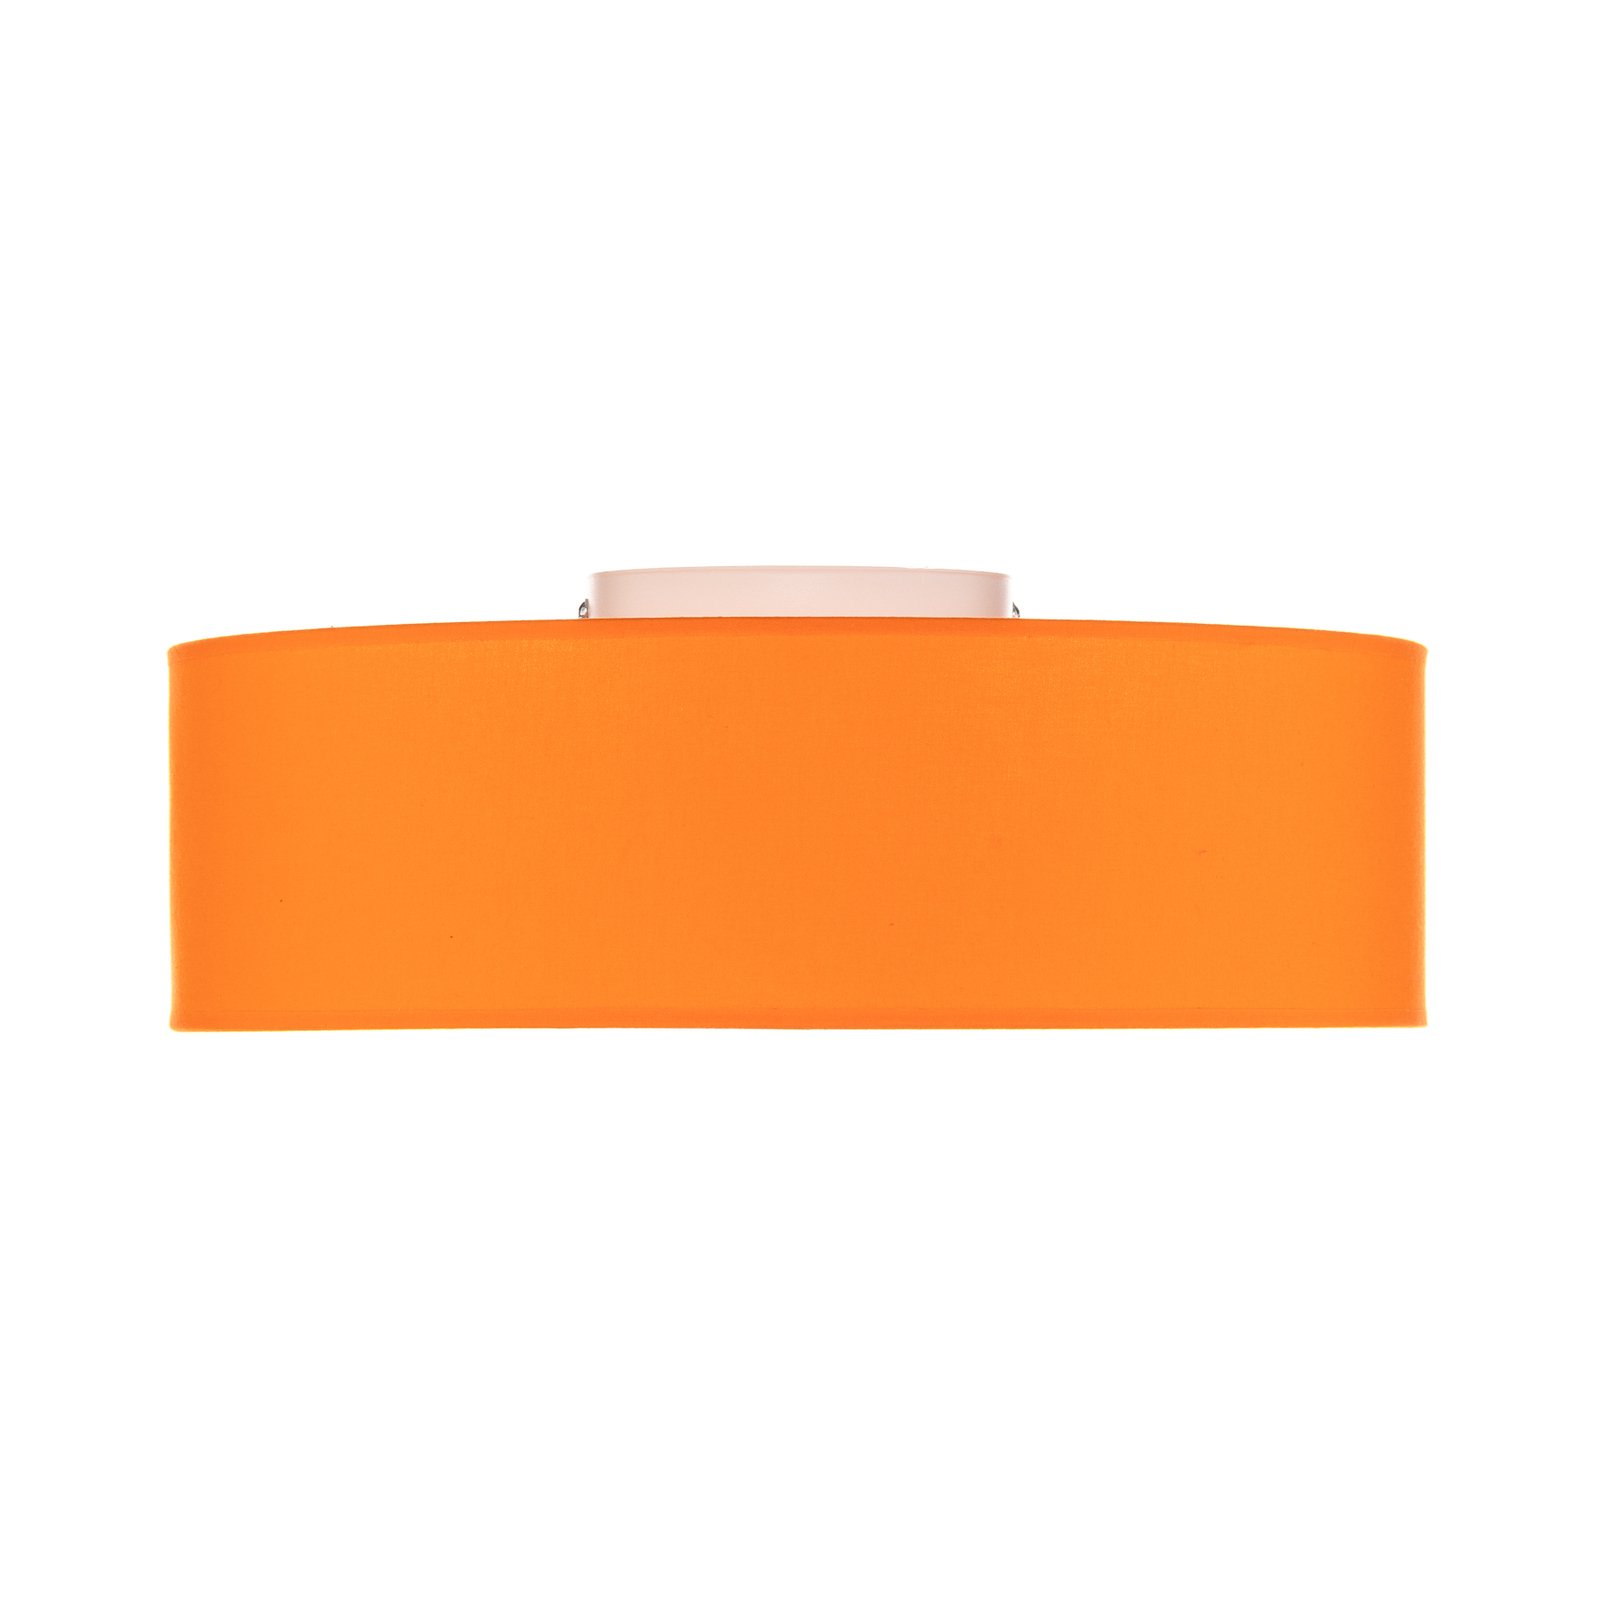 Euluna Deck, stoffen kap oranje, Ø 40 cm